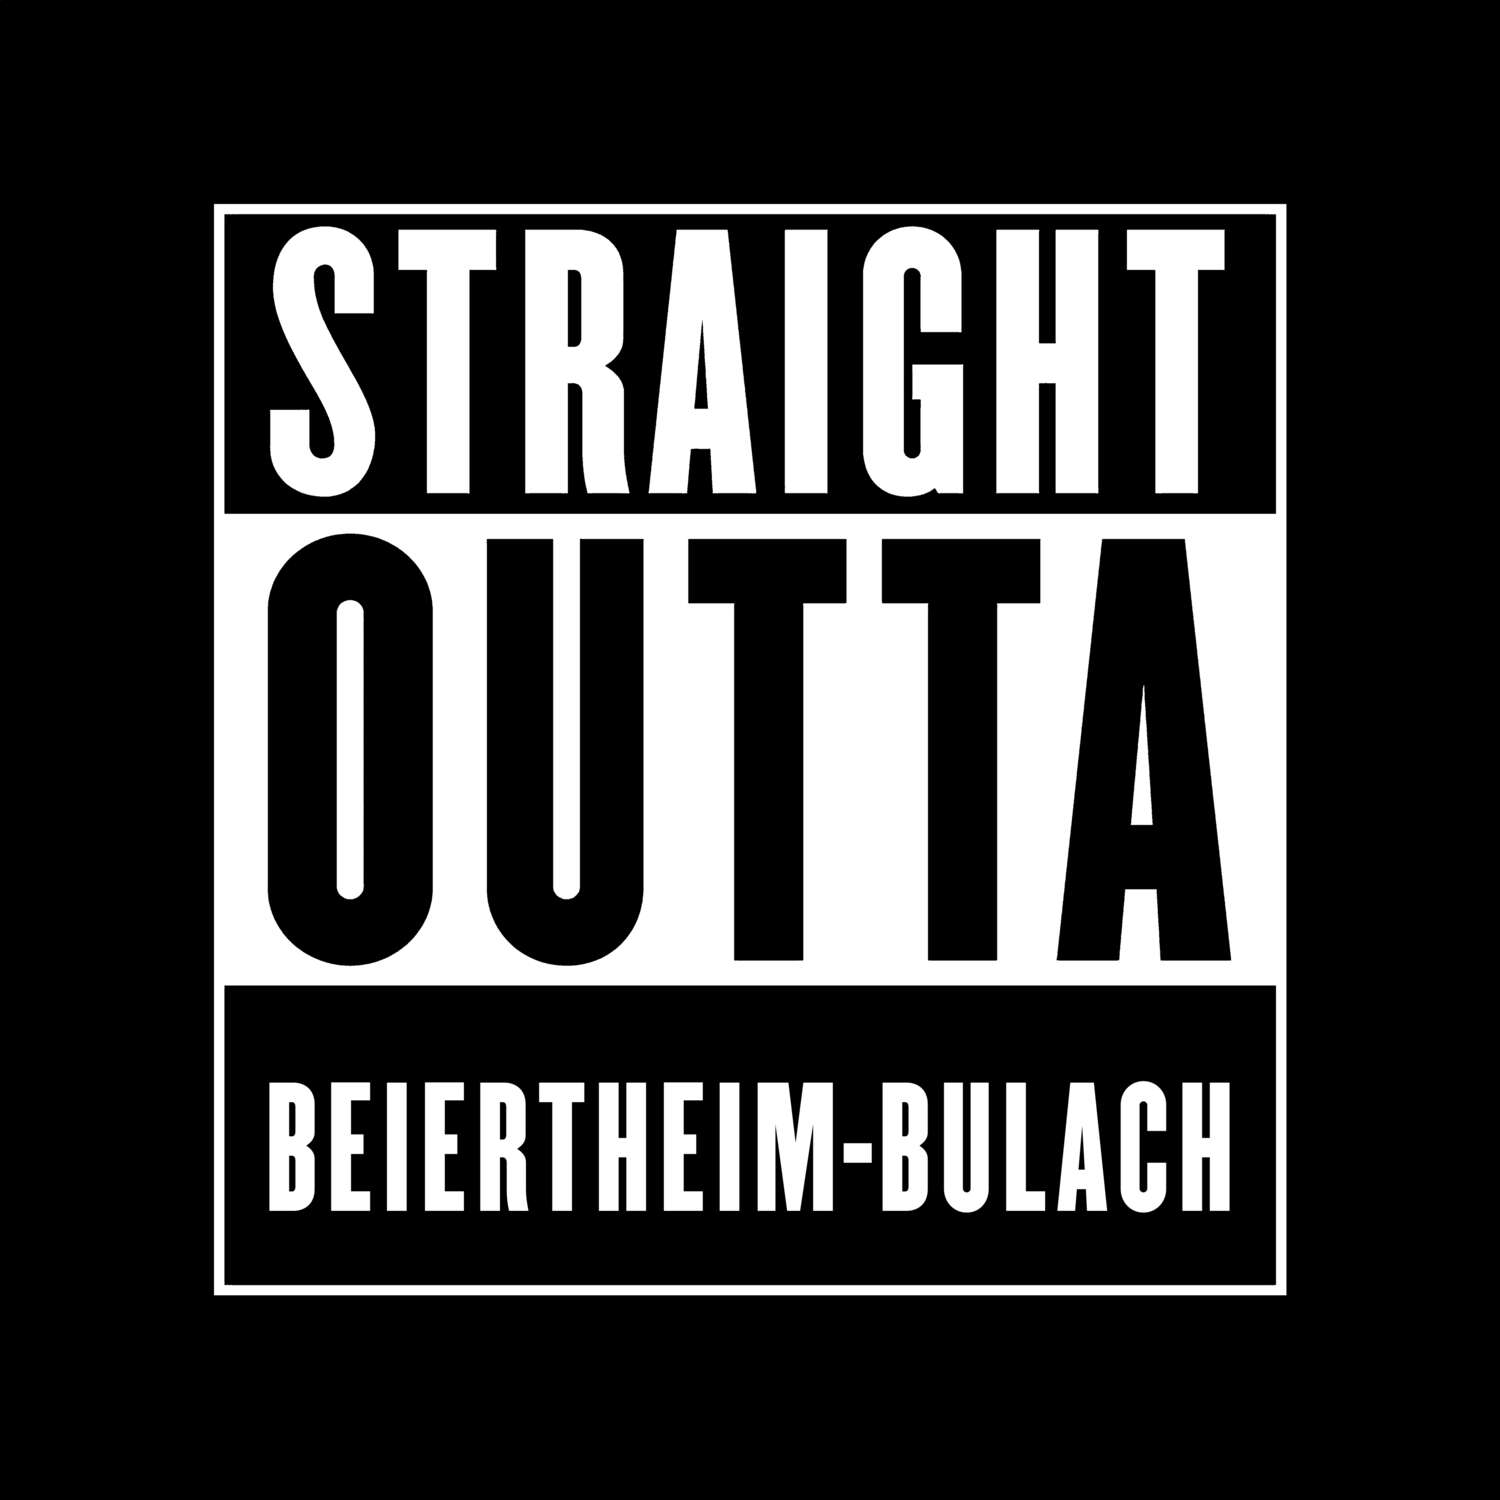 Beiertheim-Bulach T-Shirt »Straight Outta«